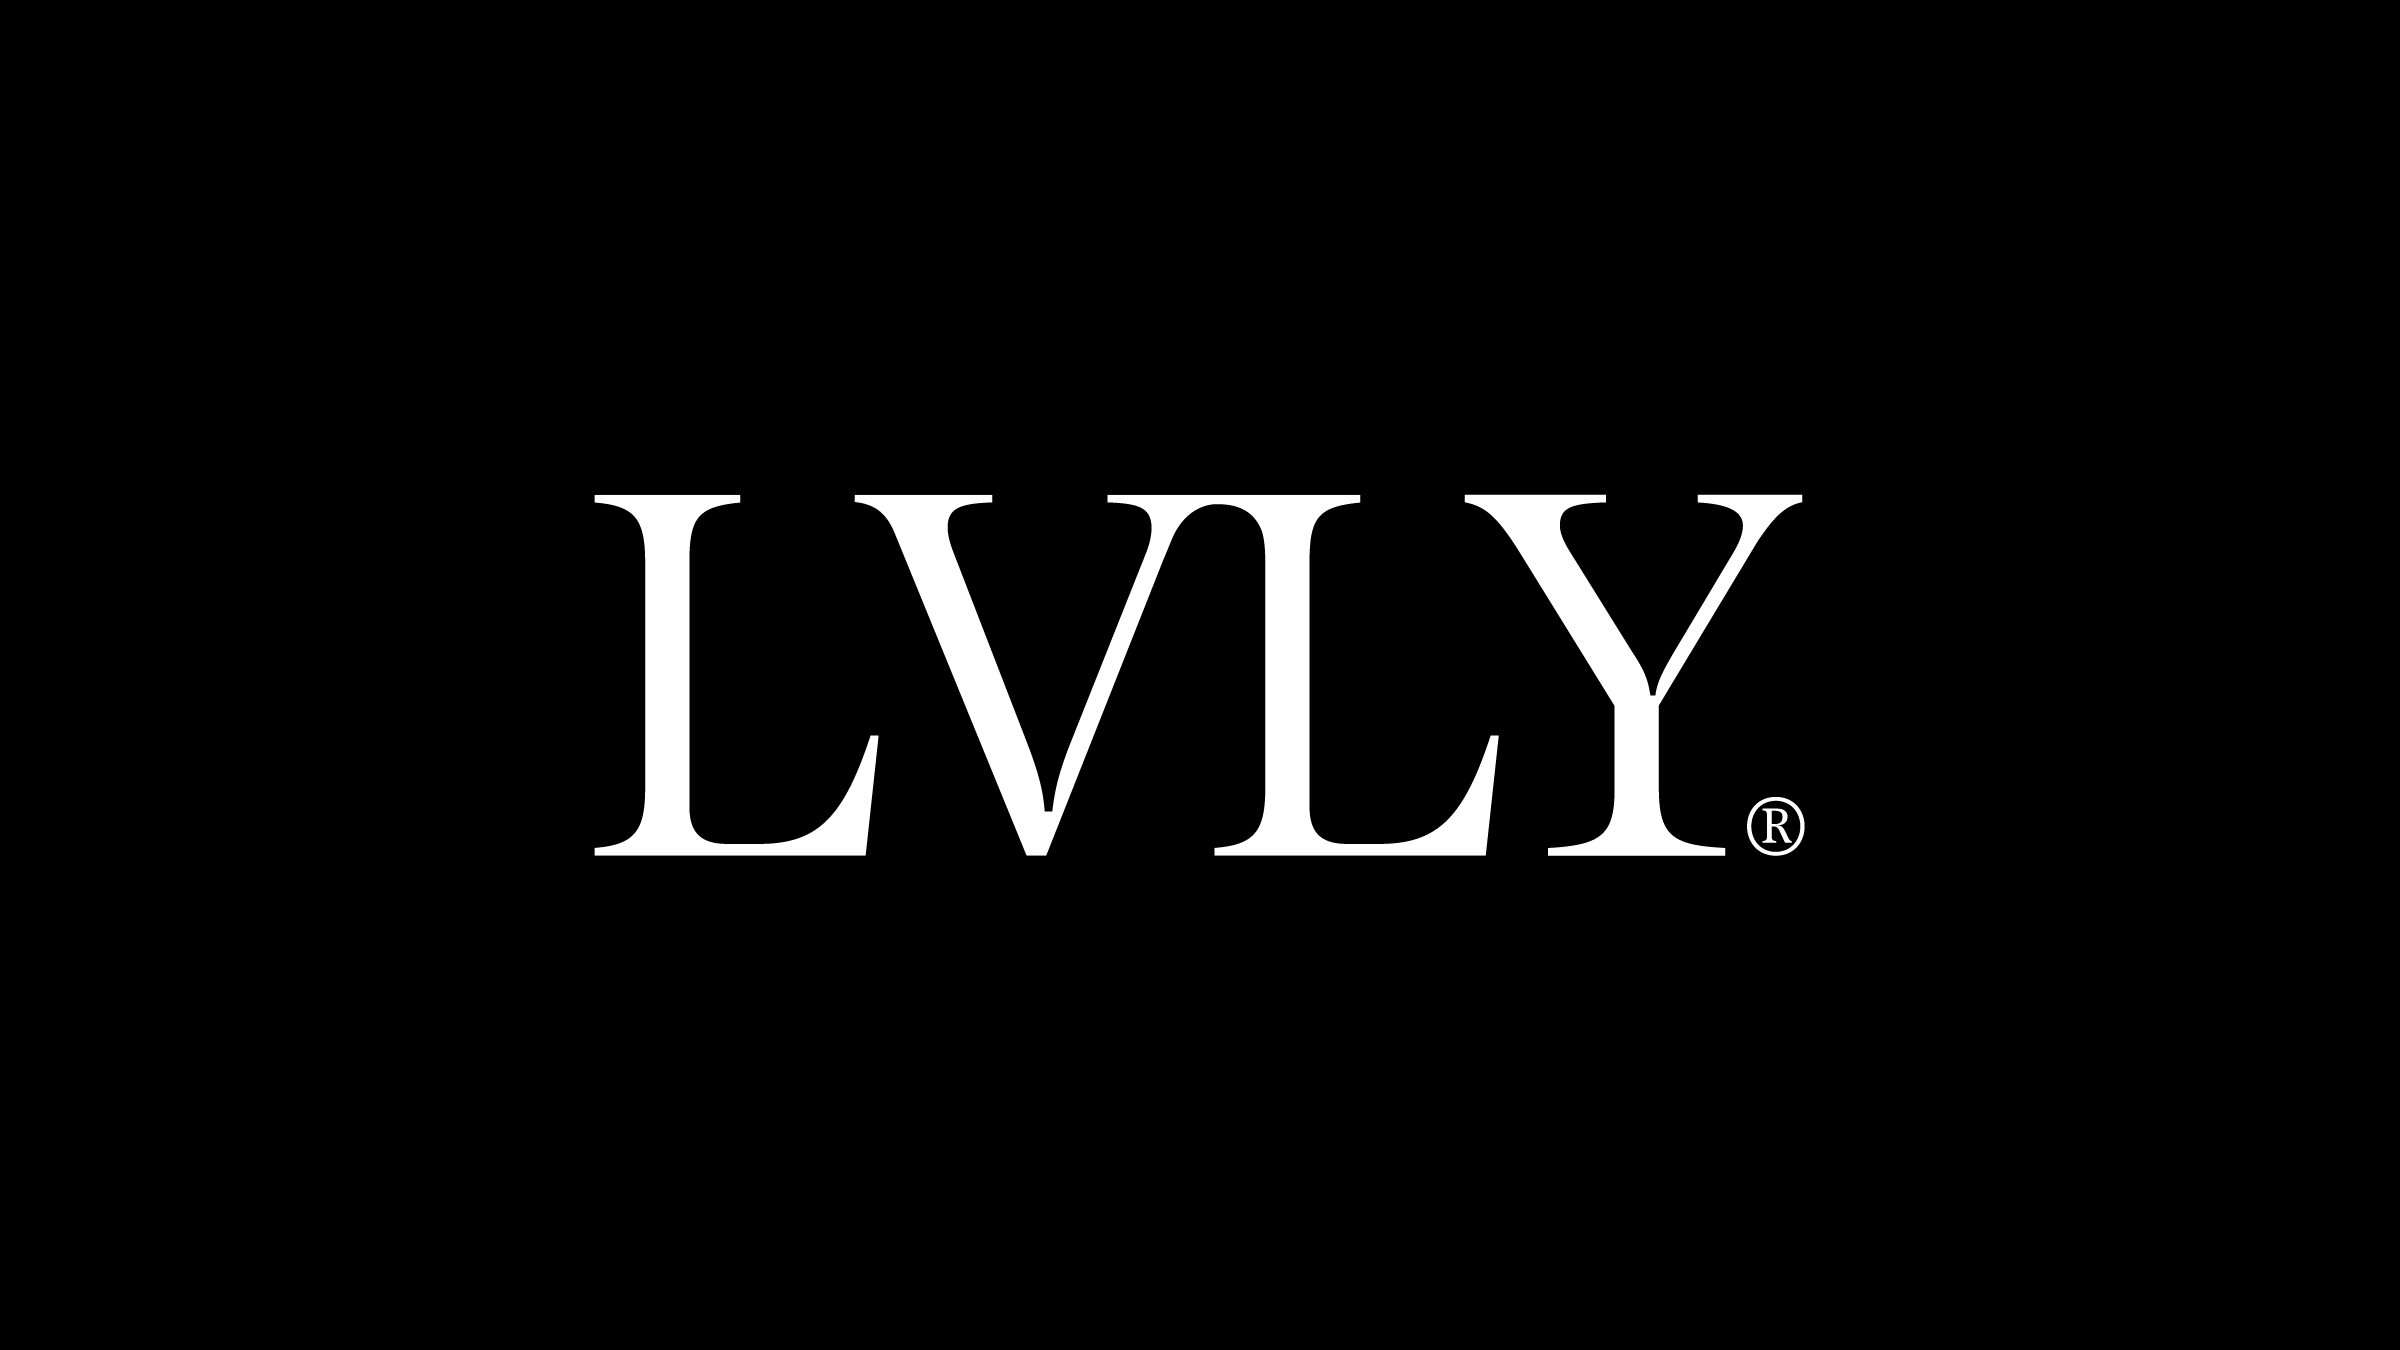 lvly-logo-toggle